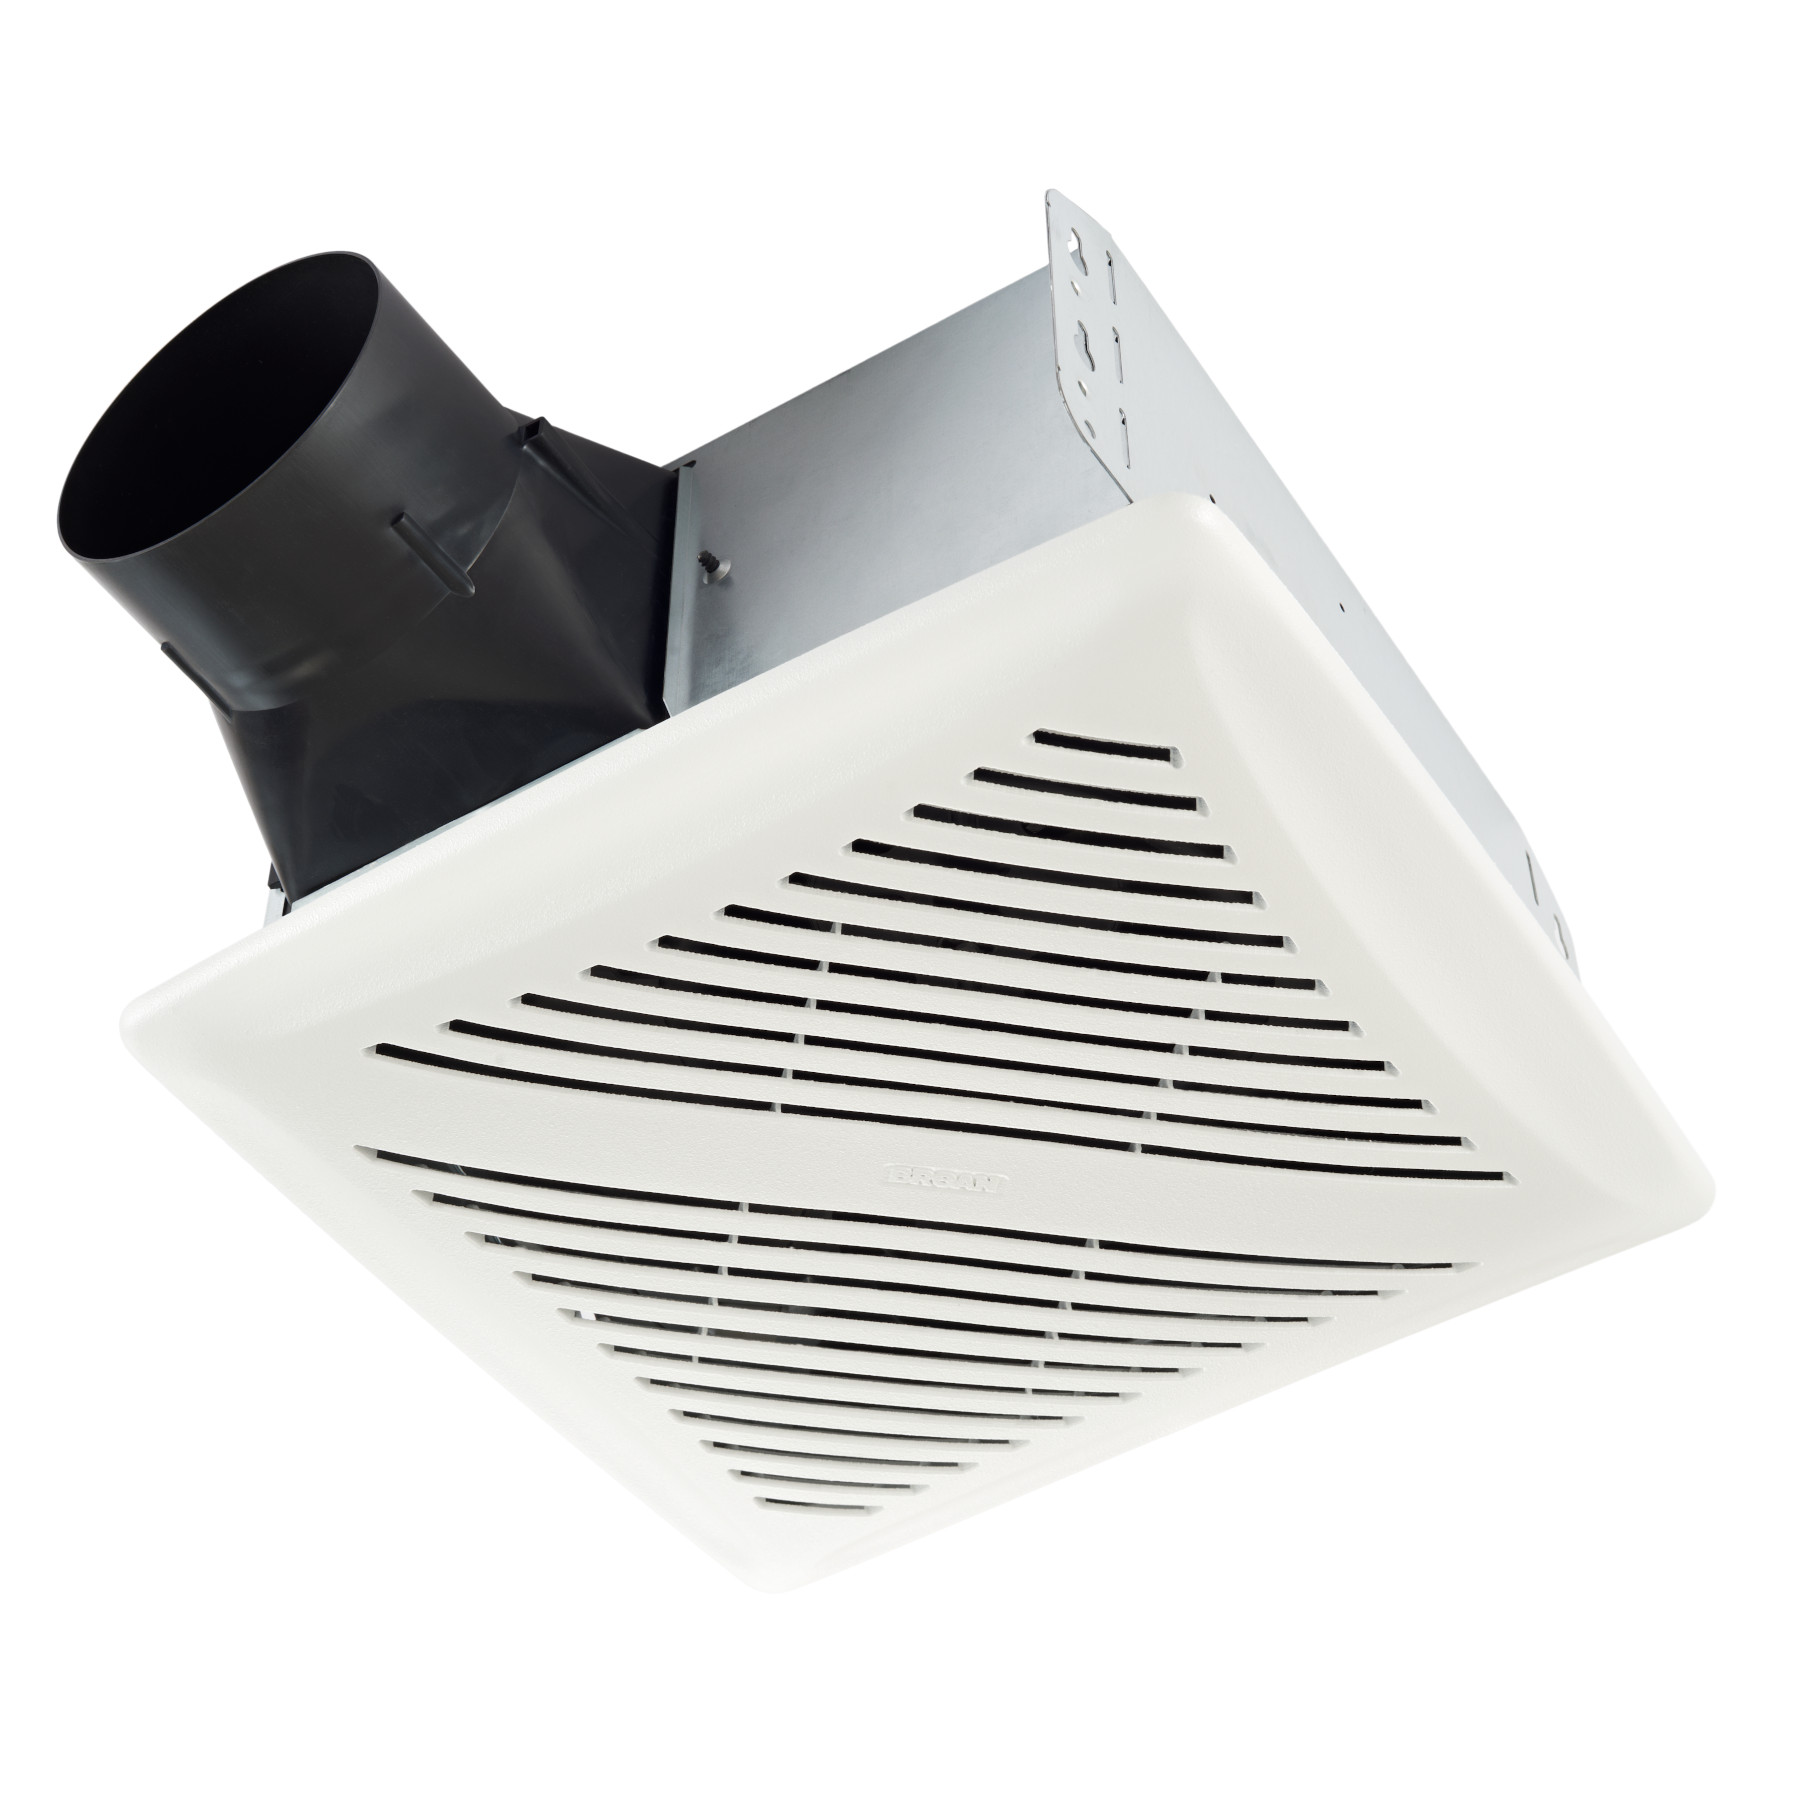 Broan® Humidity Sensing Bathroom Exhaust Fan ENERGY STAR®, 50-110 CFM